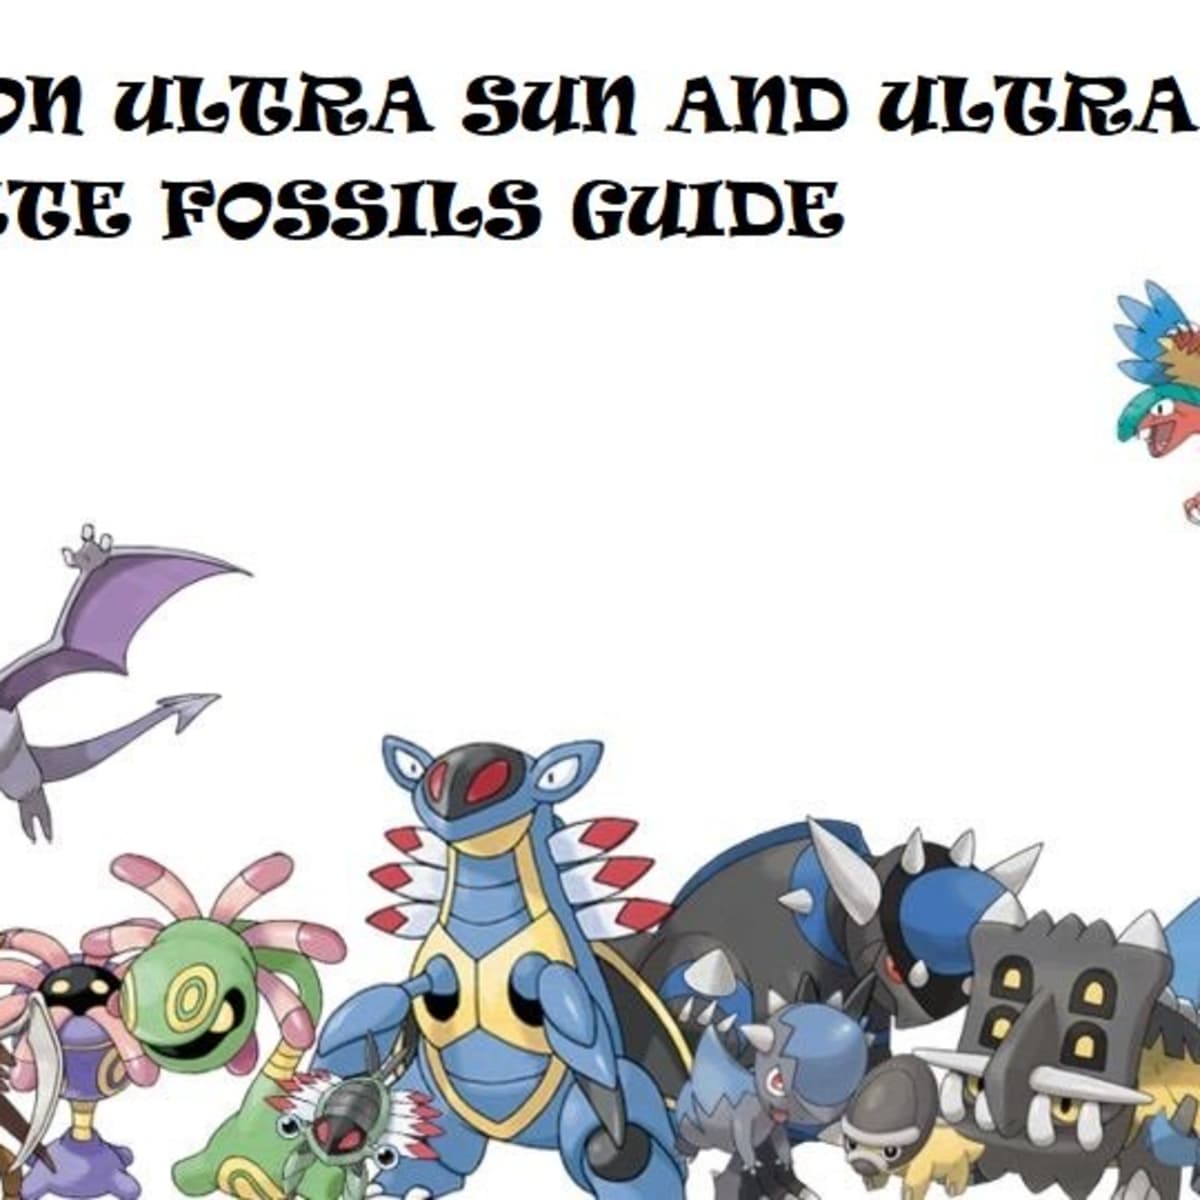 Pokémon Ultra Sun and Ultra Moon Eevee Evolution Guide - LevelSkip